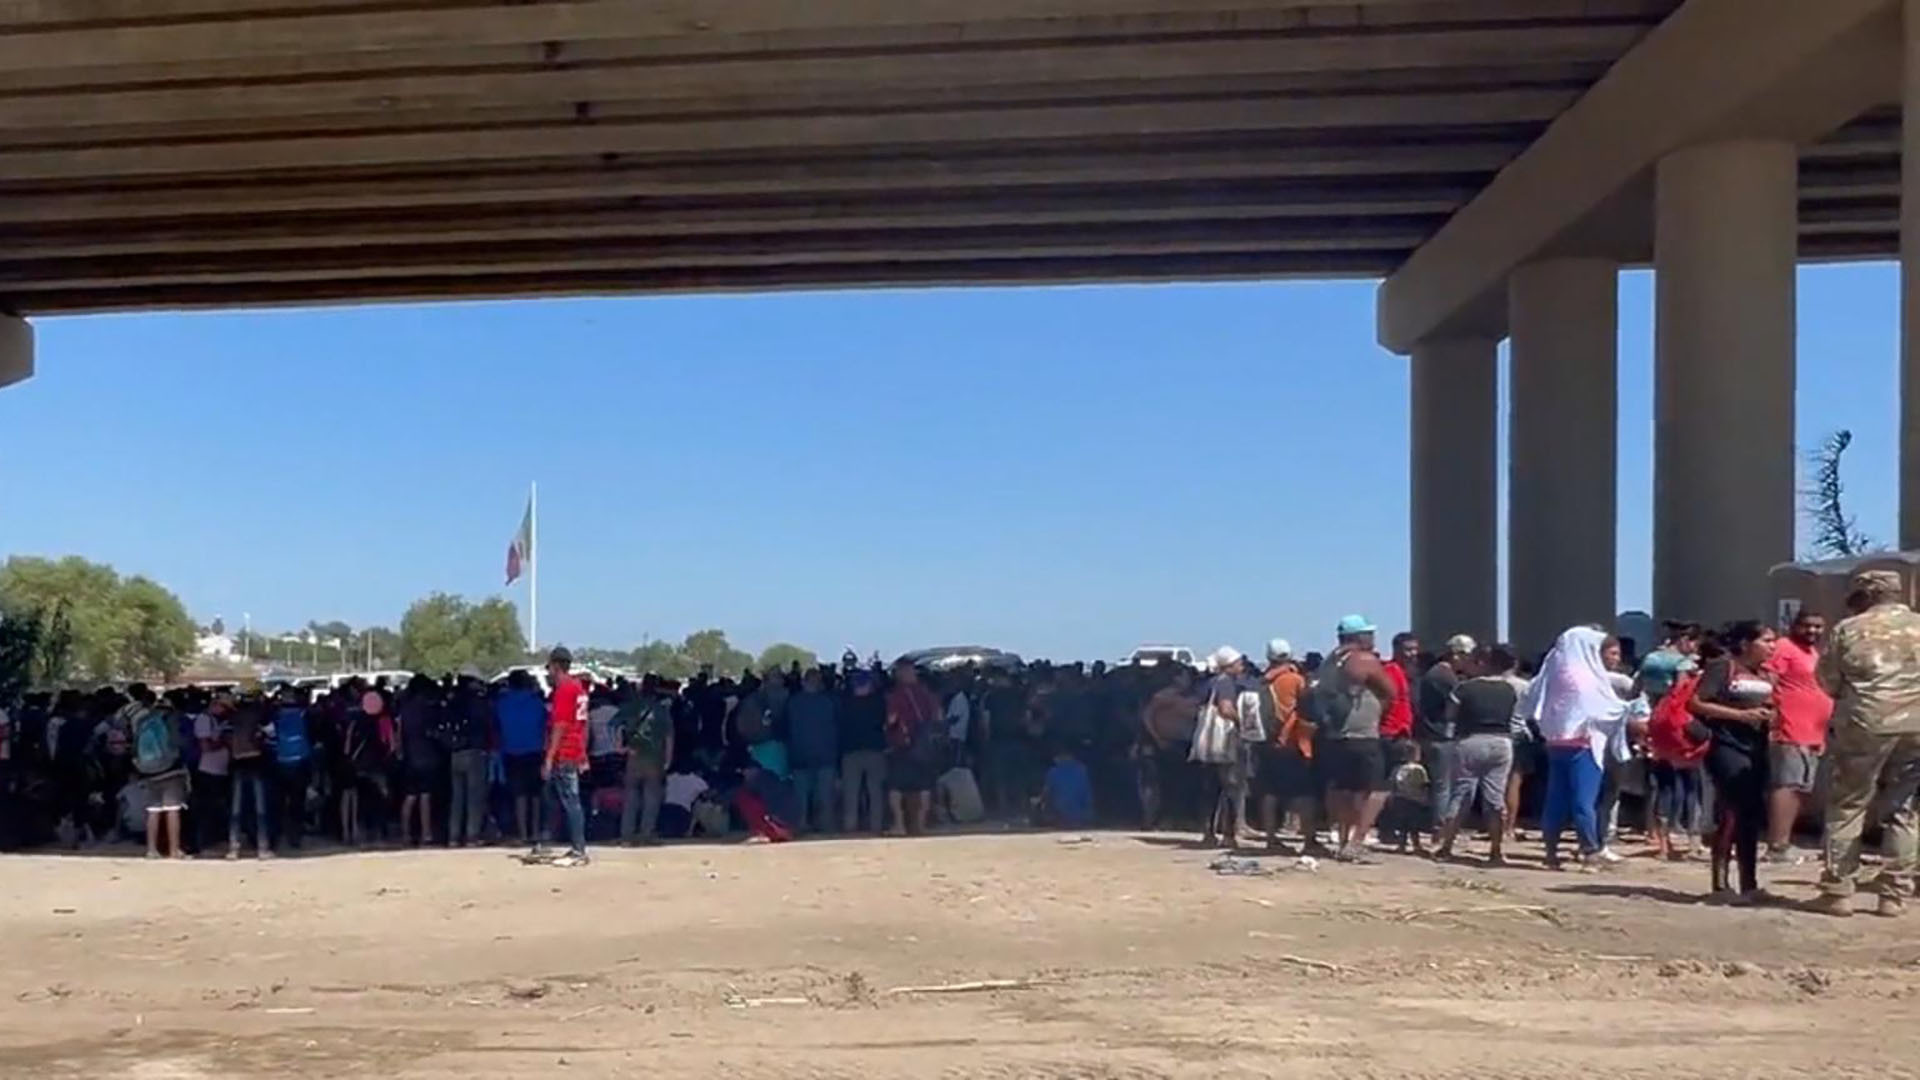 Watch CBS Mornings: U.S. border crossings at near-record levels - Full ...